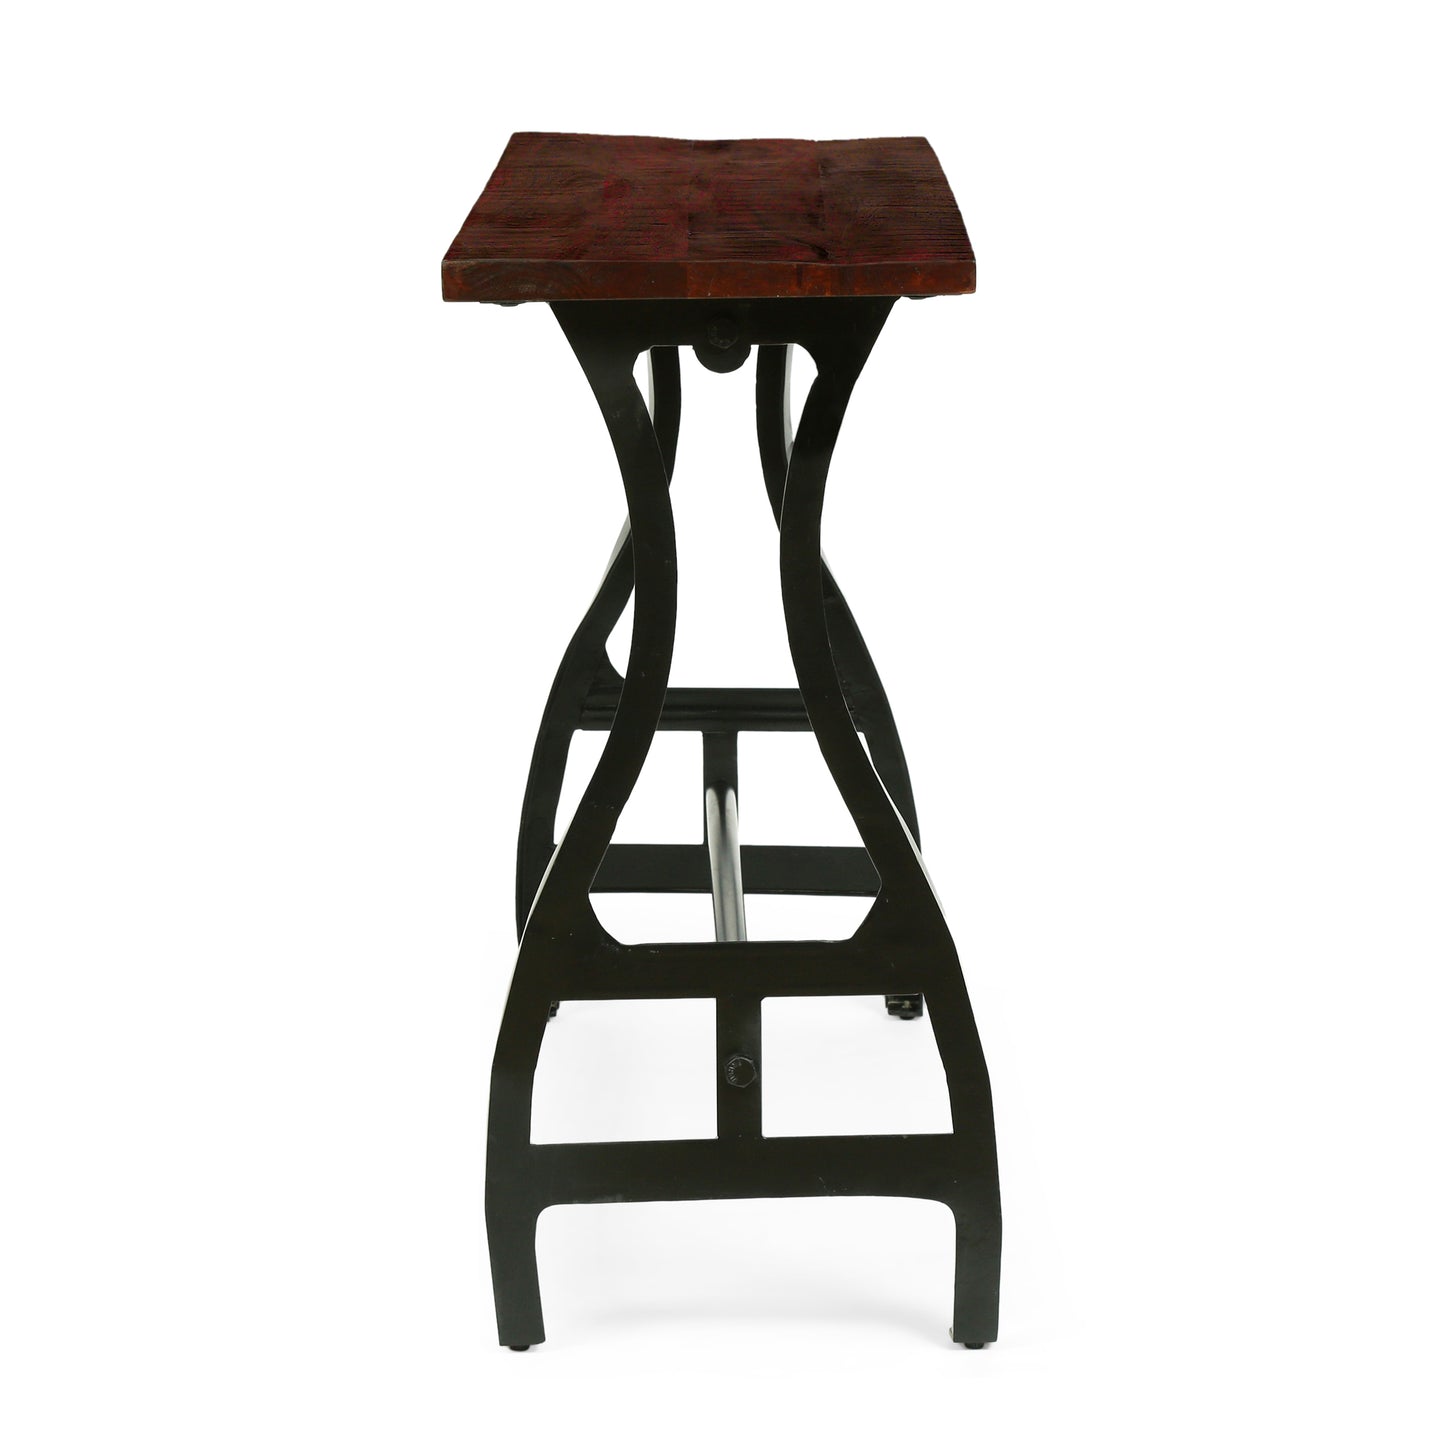 Jolson Modern Industrial Handmade Acacia Wood Console Table, Dark Brown and Black